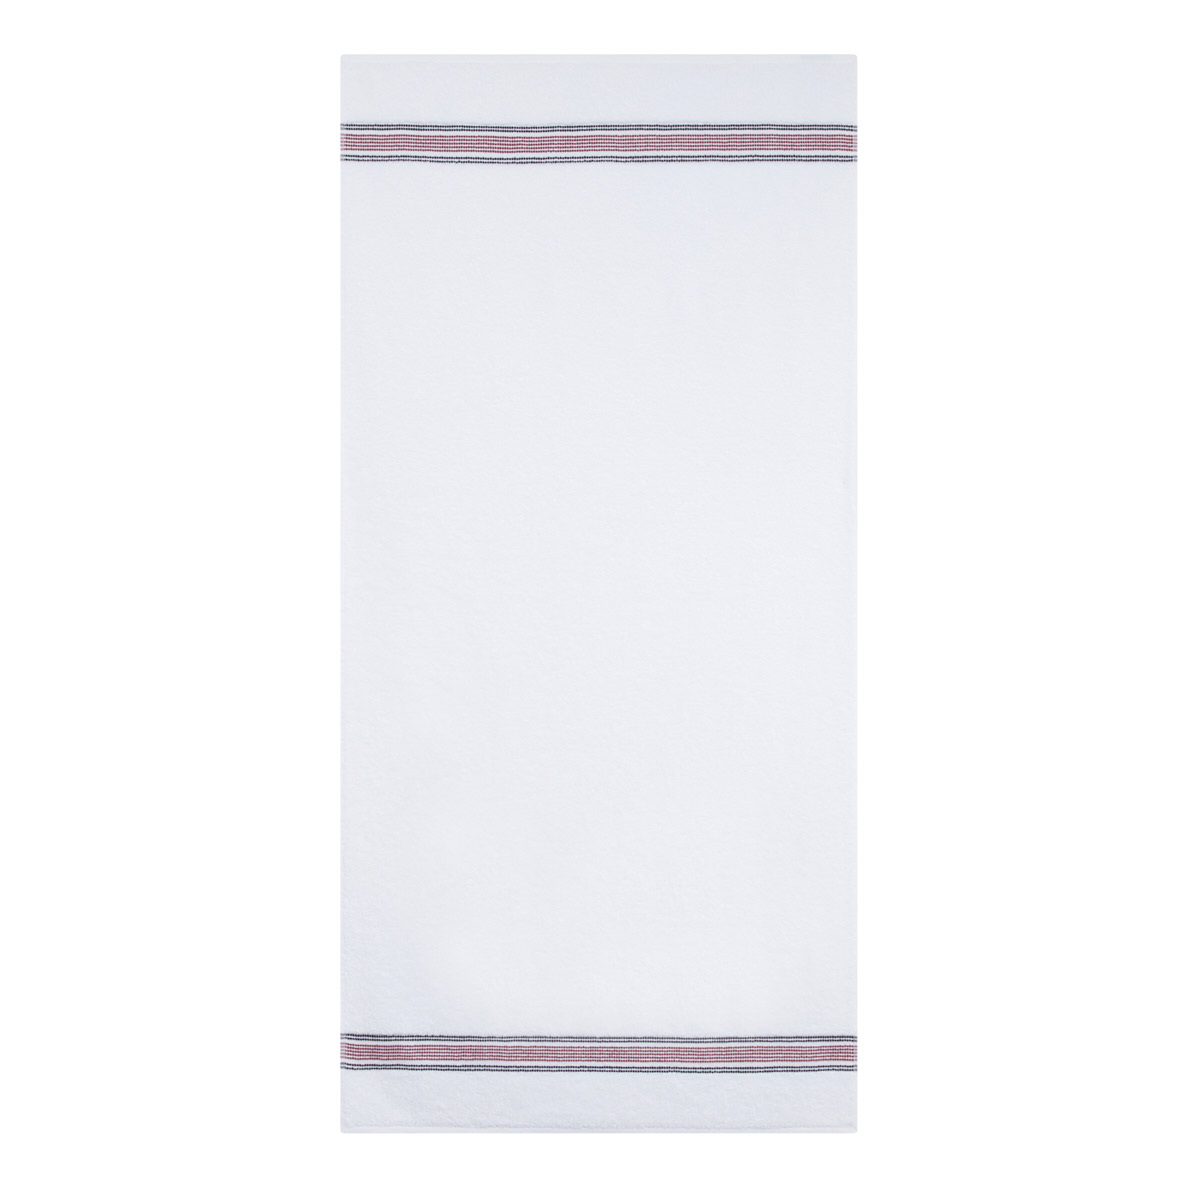 Towel Sicilia, Royal - different sizes - Organic cotton - image 2